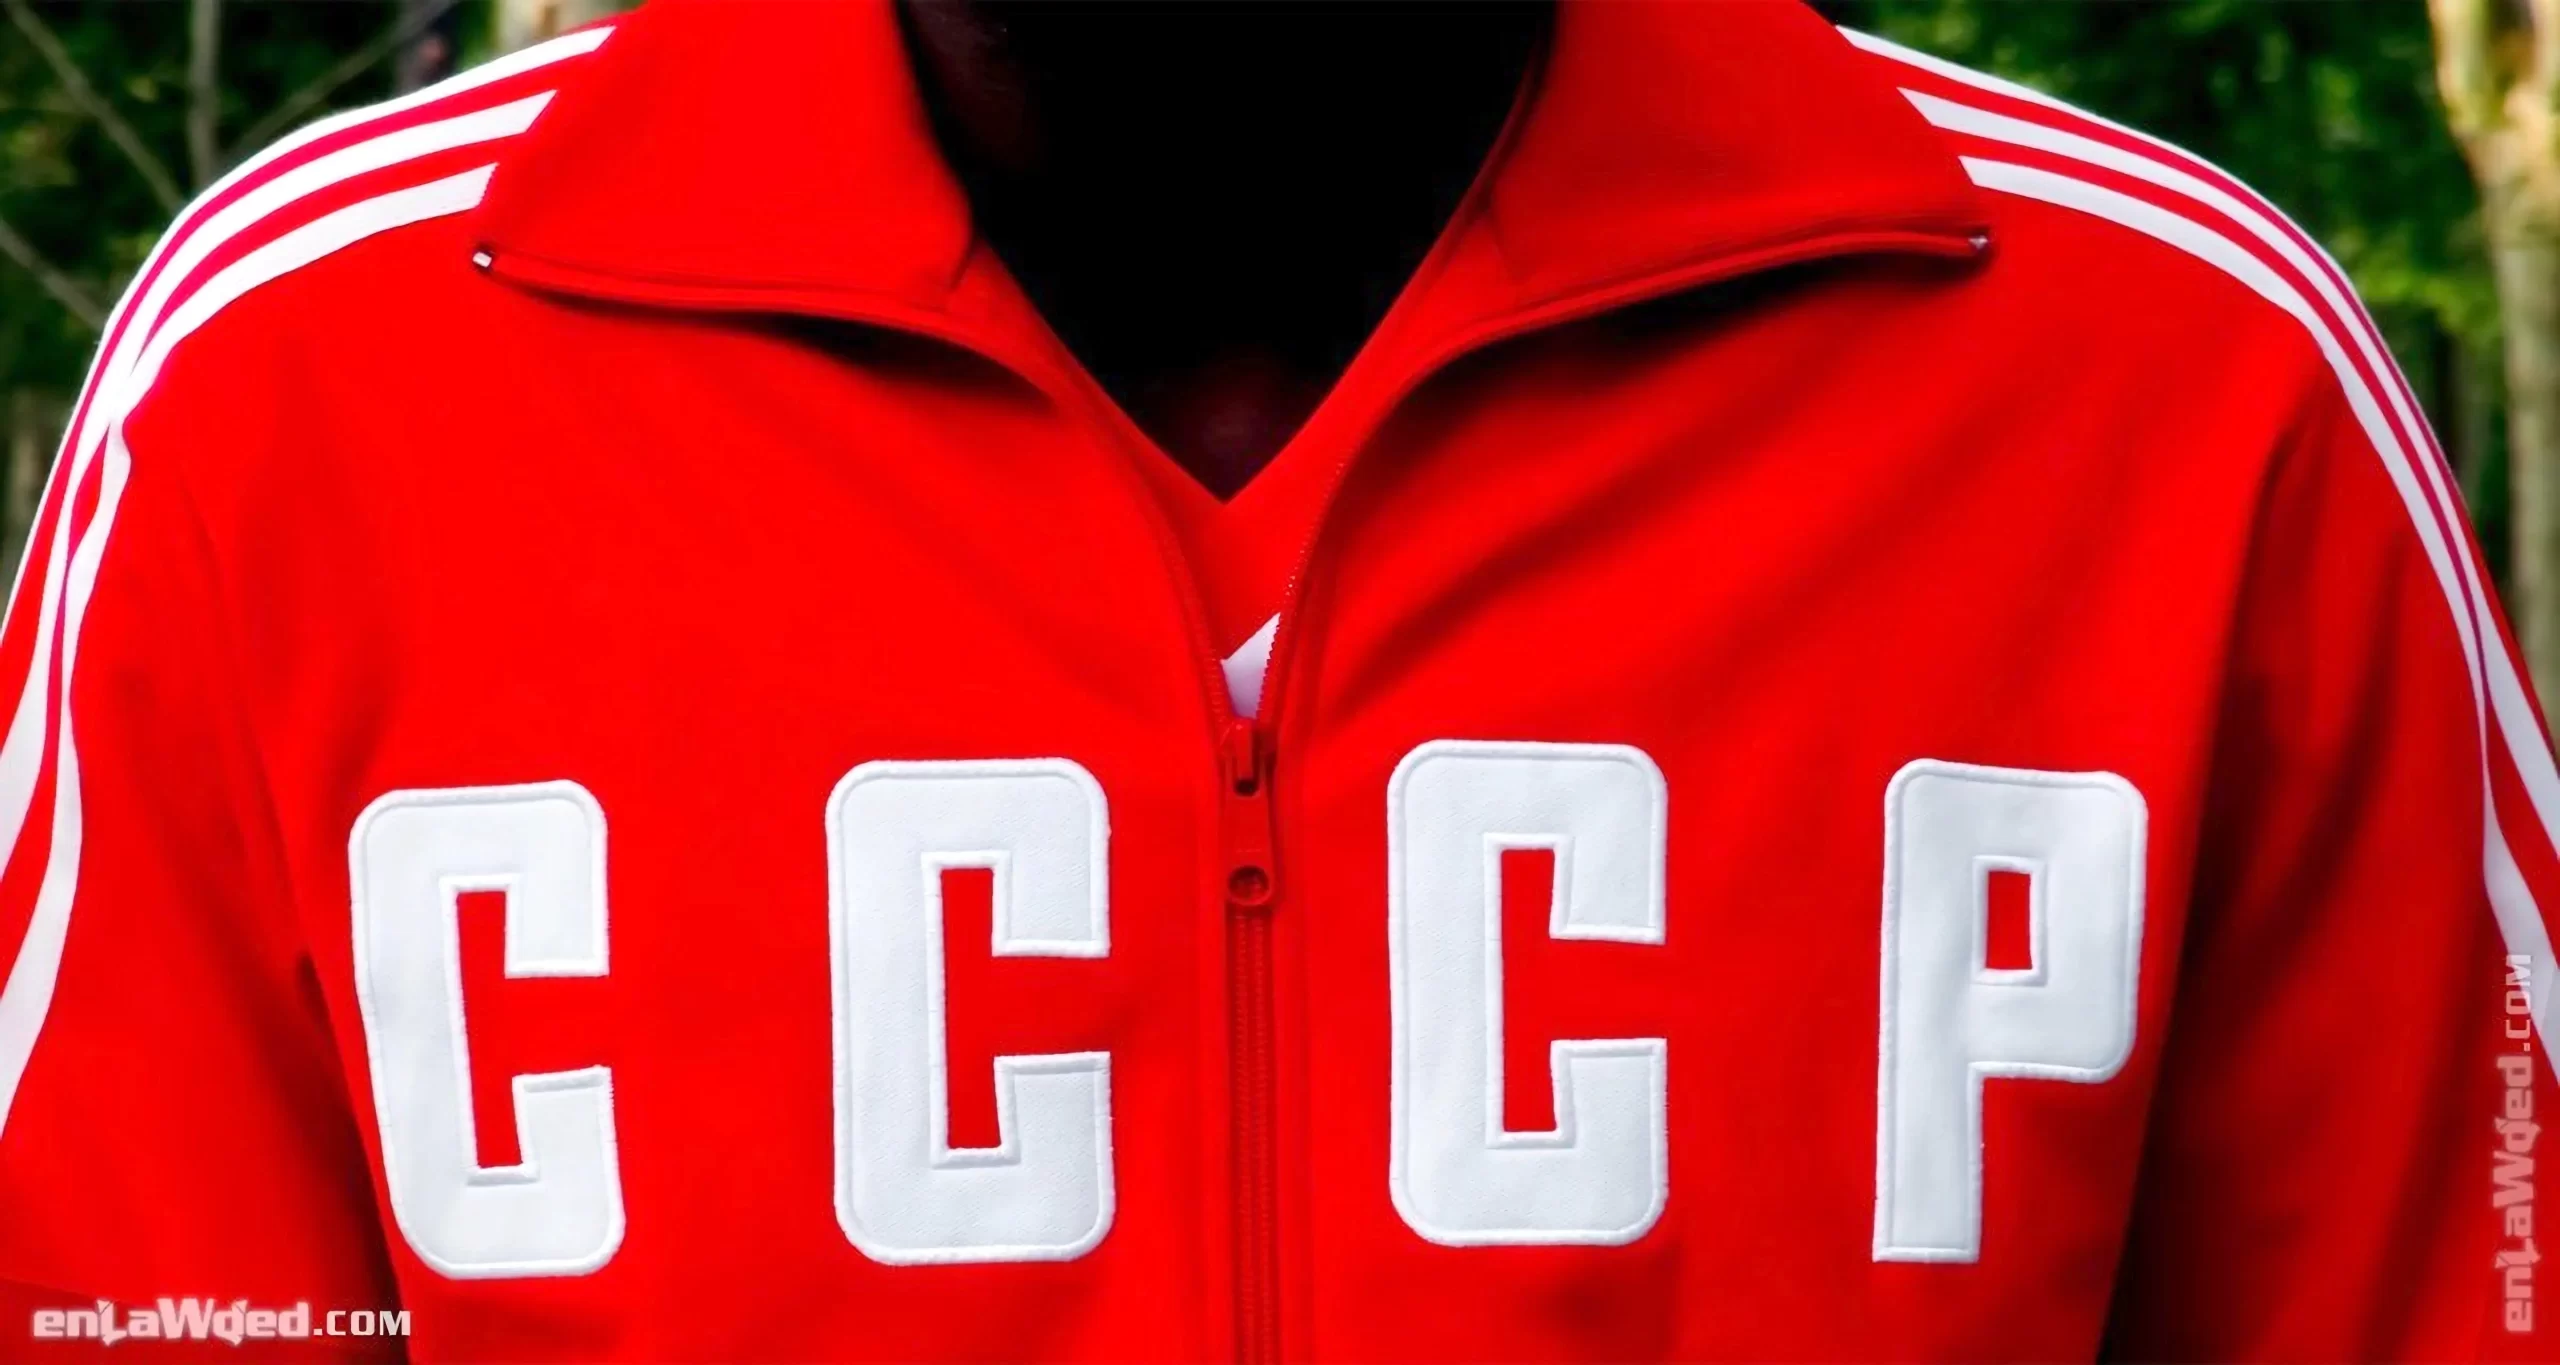 Men’s 2002 Soviet CCCP ’82 TT by Adidas Originals: Epic (EnLawded.com file #lmc53xw7a4802kwfnz)